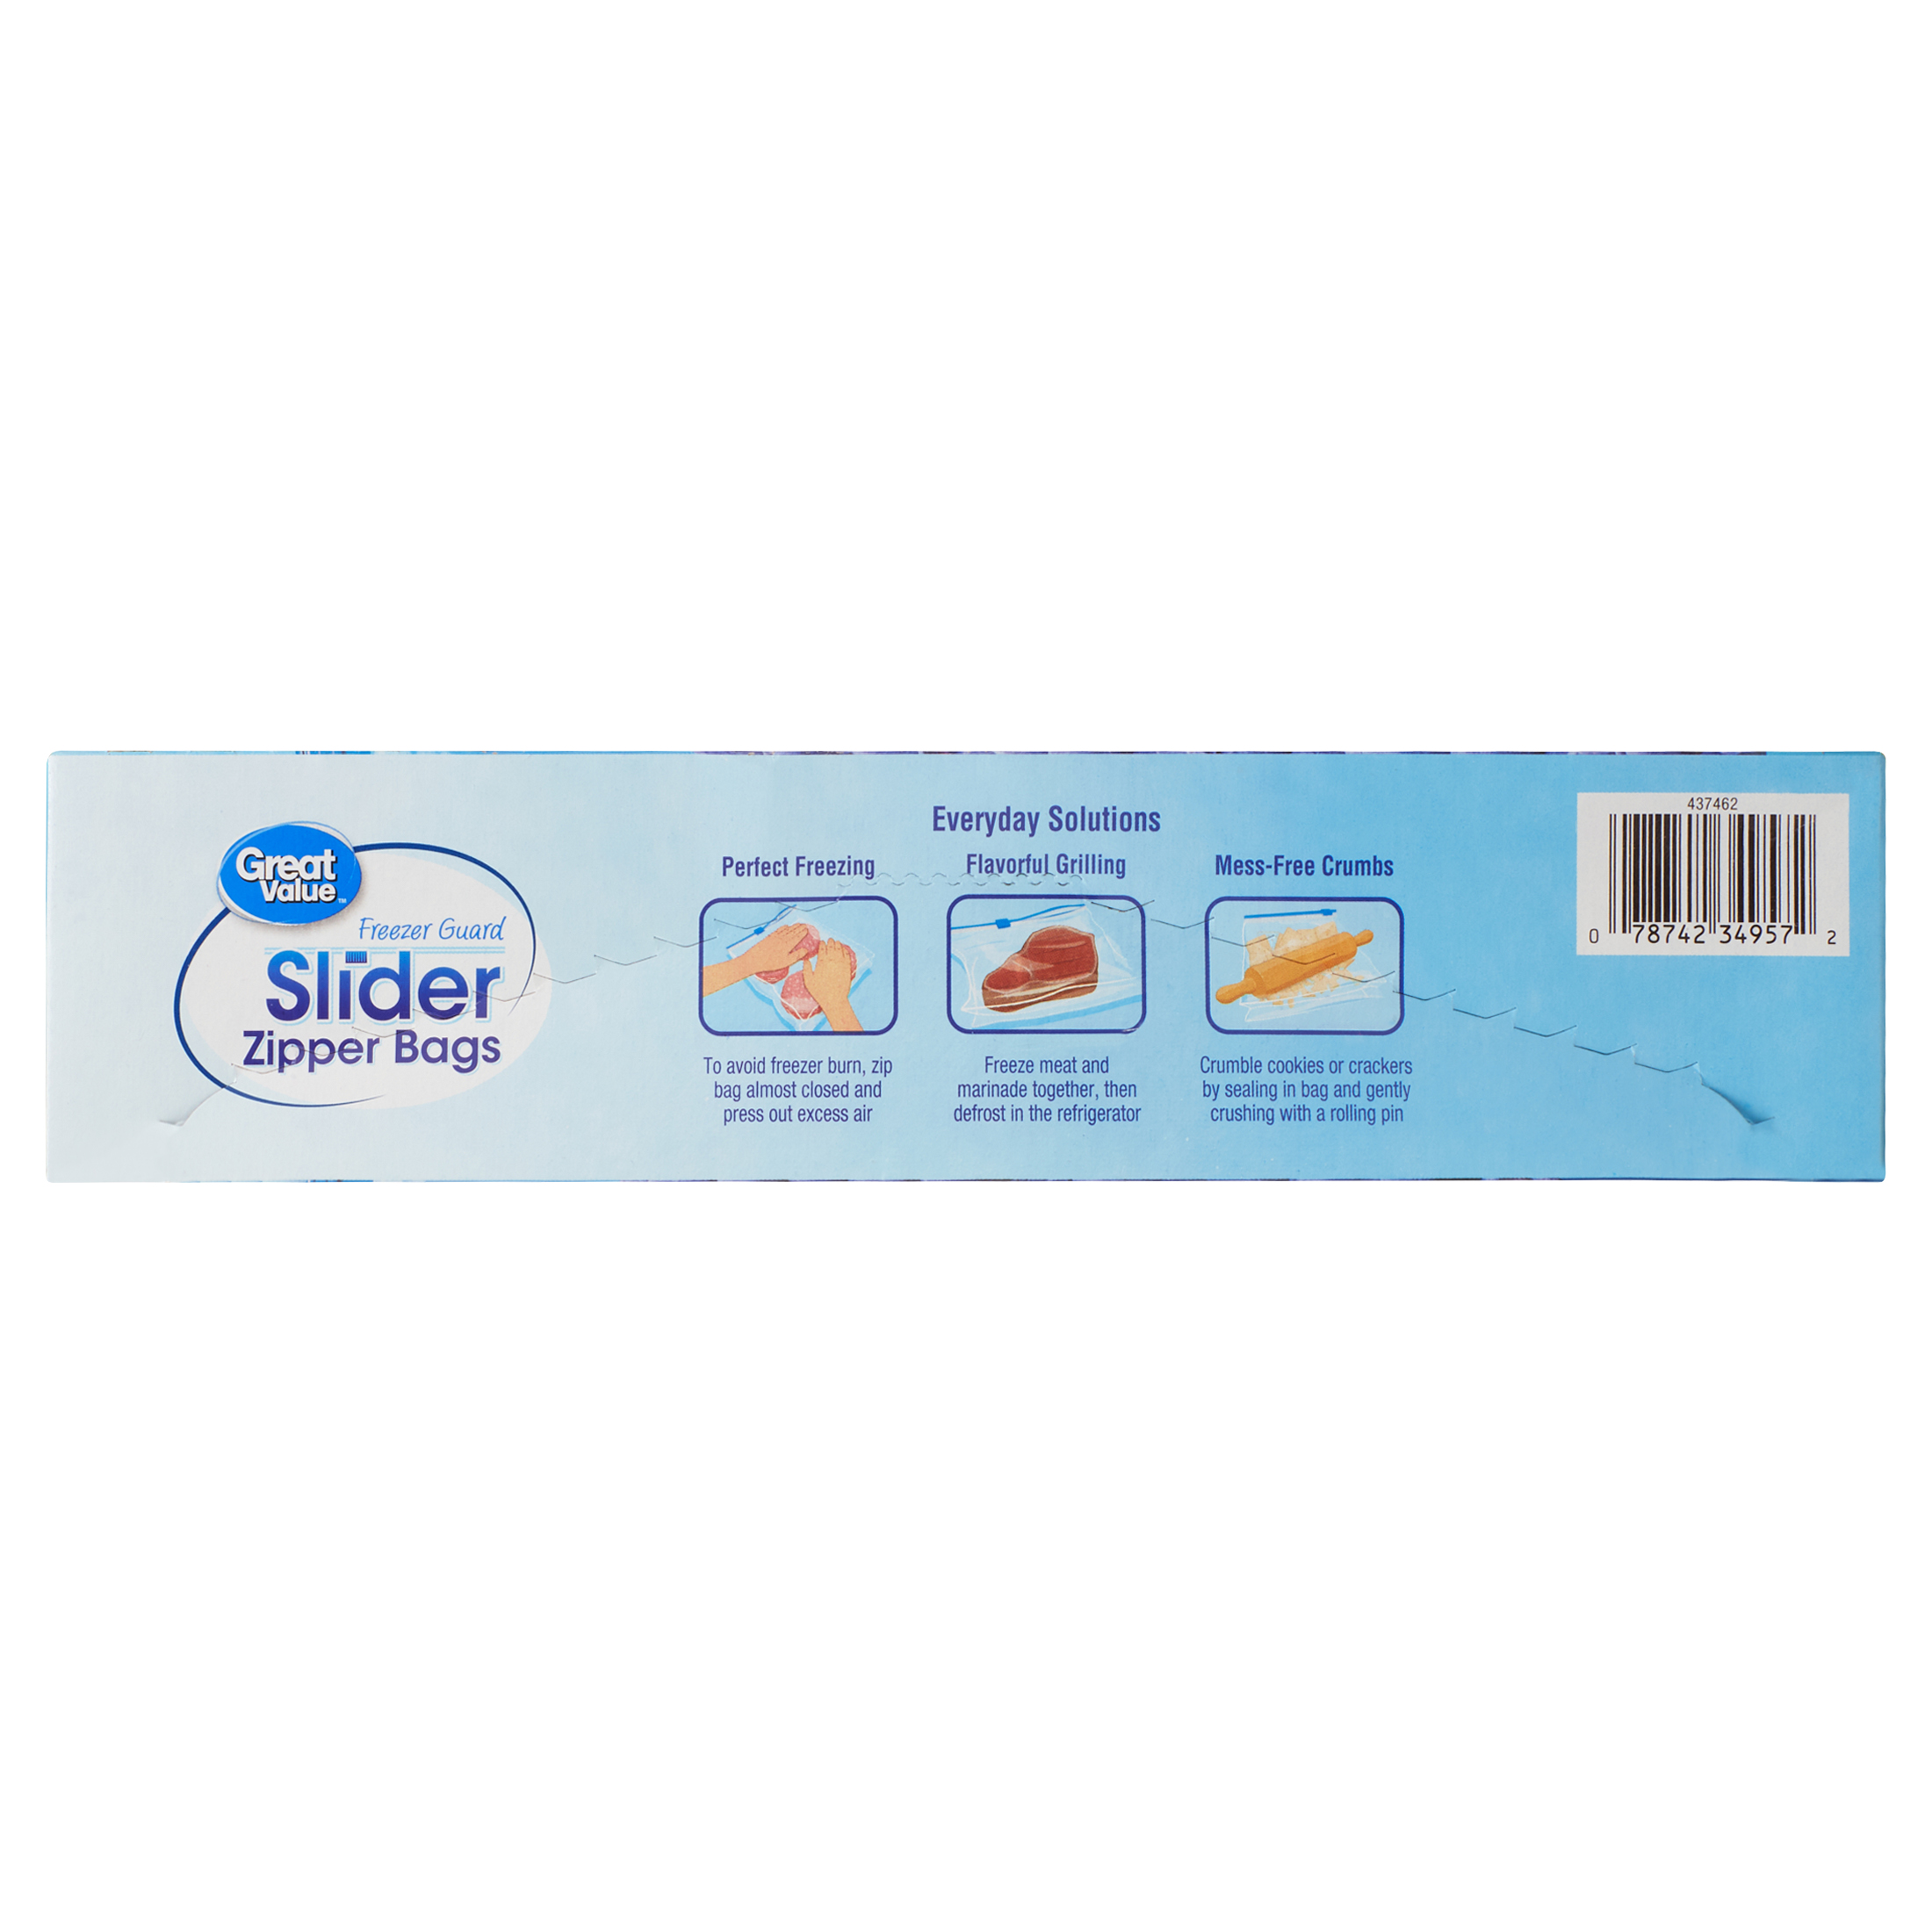 Great Value Freezer Guard Slider Zipper Bags, Gallon Freezer, 20 Count - image 5 of 5